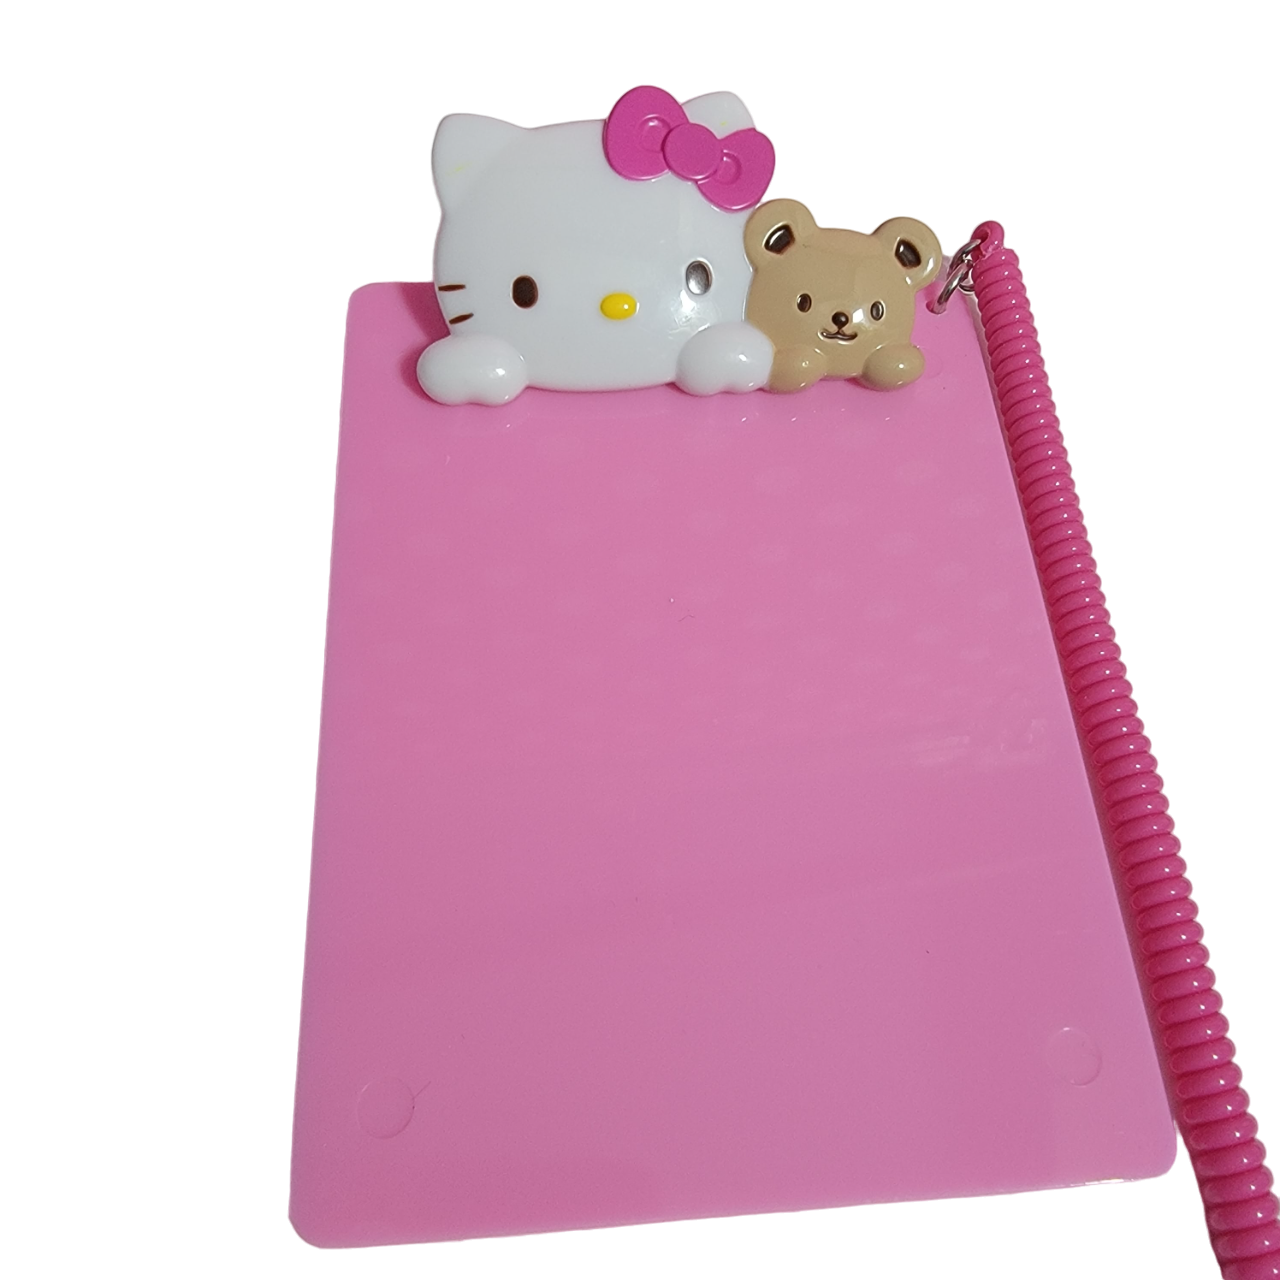 Sanrio Hello Kitty Mini Clipboard Set, y2k style